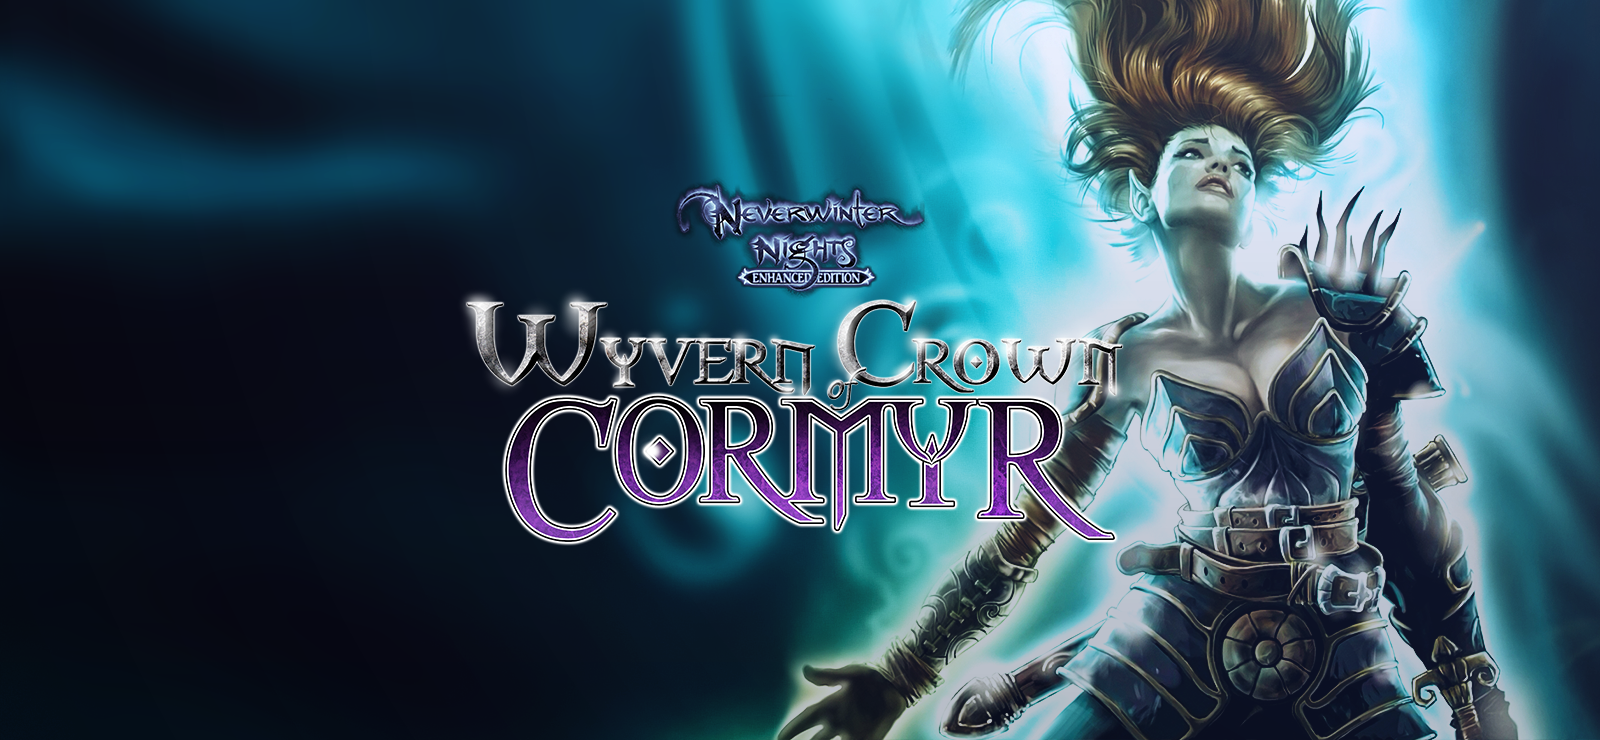 Neverwinter Nights: Wyvern Crown Of Cormyr